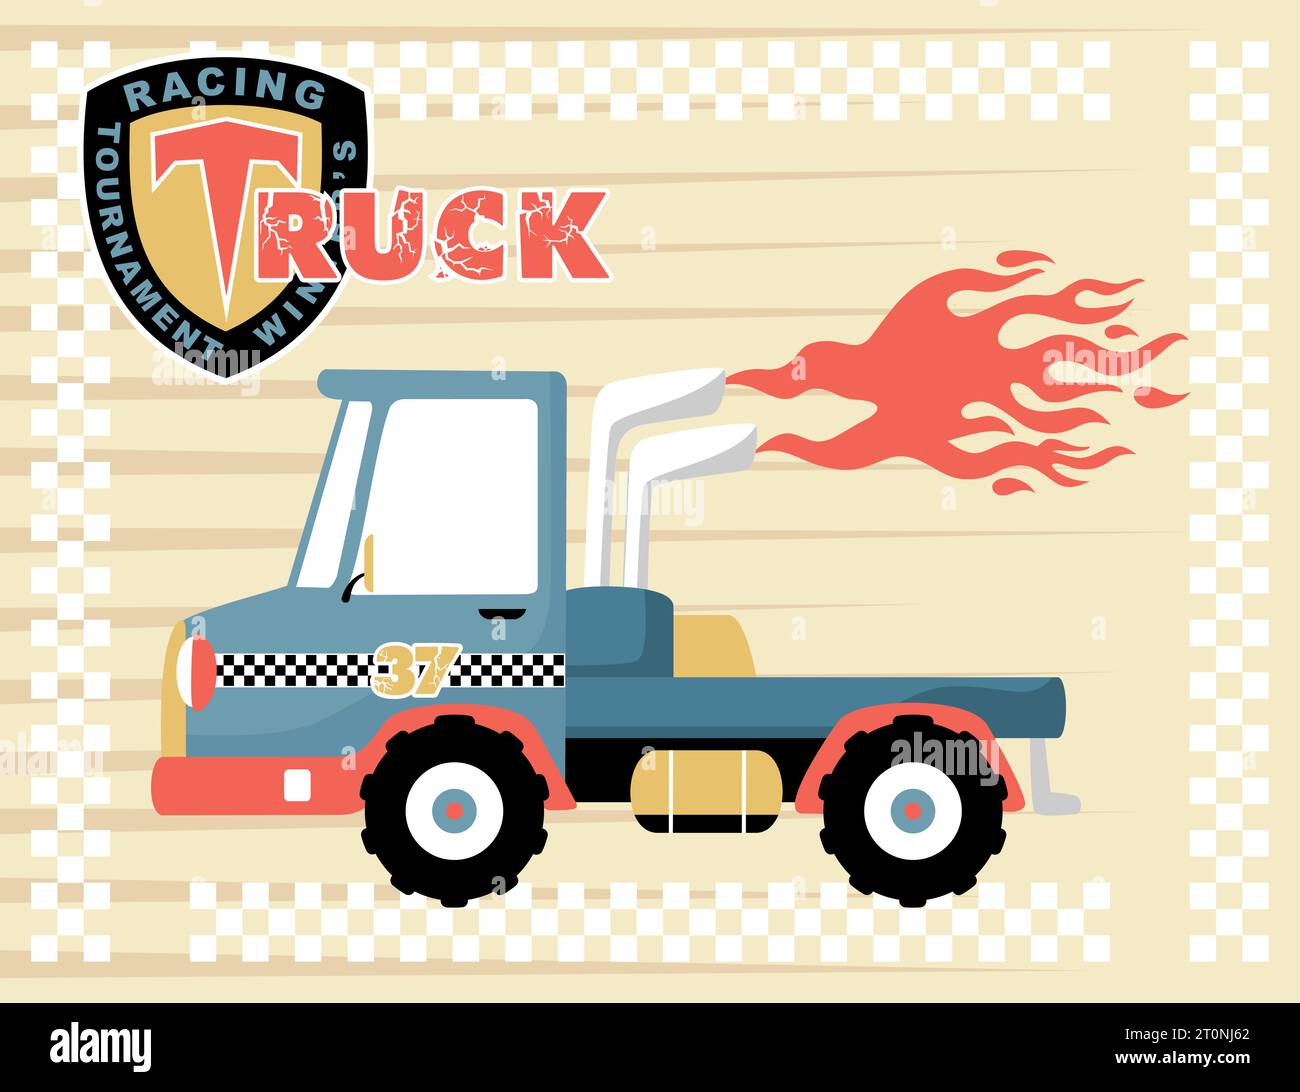 vector cartoon illustration of racing truck with flames Stock Vector